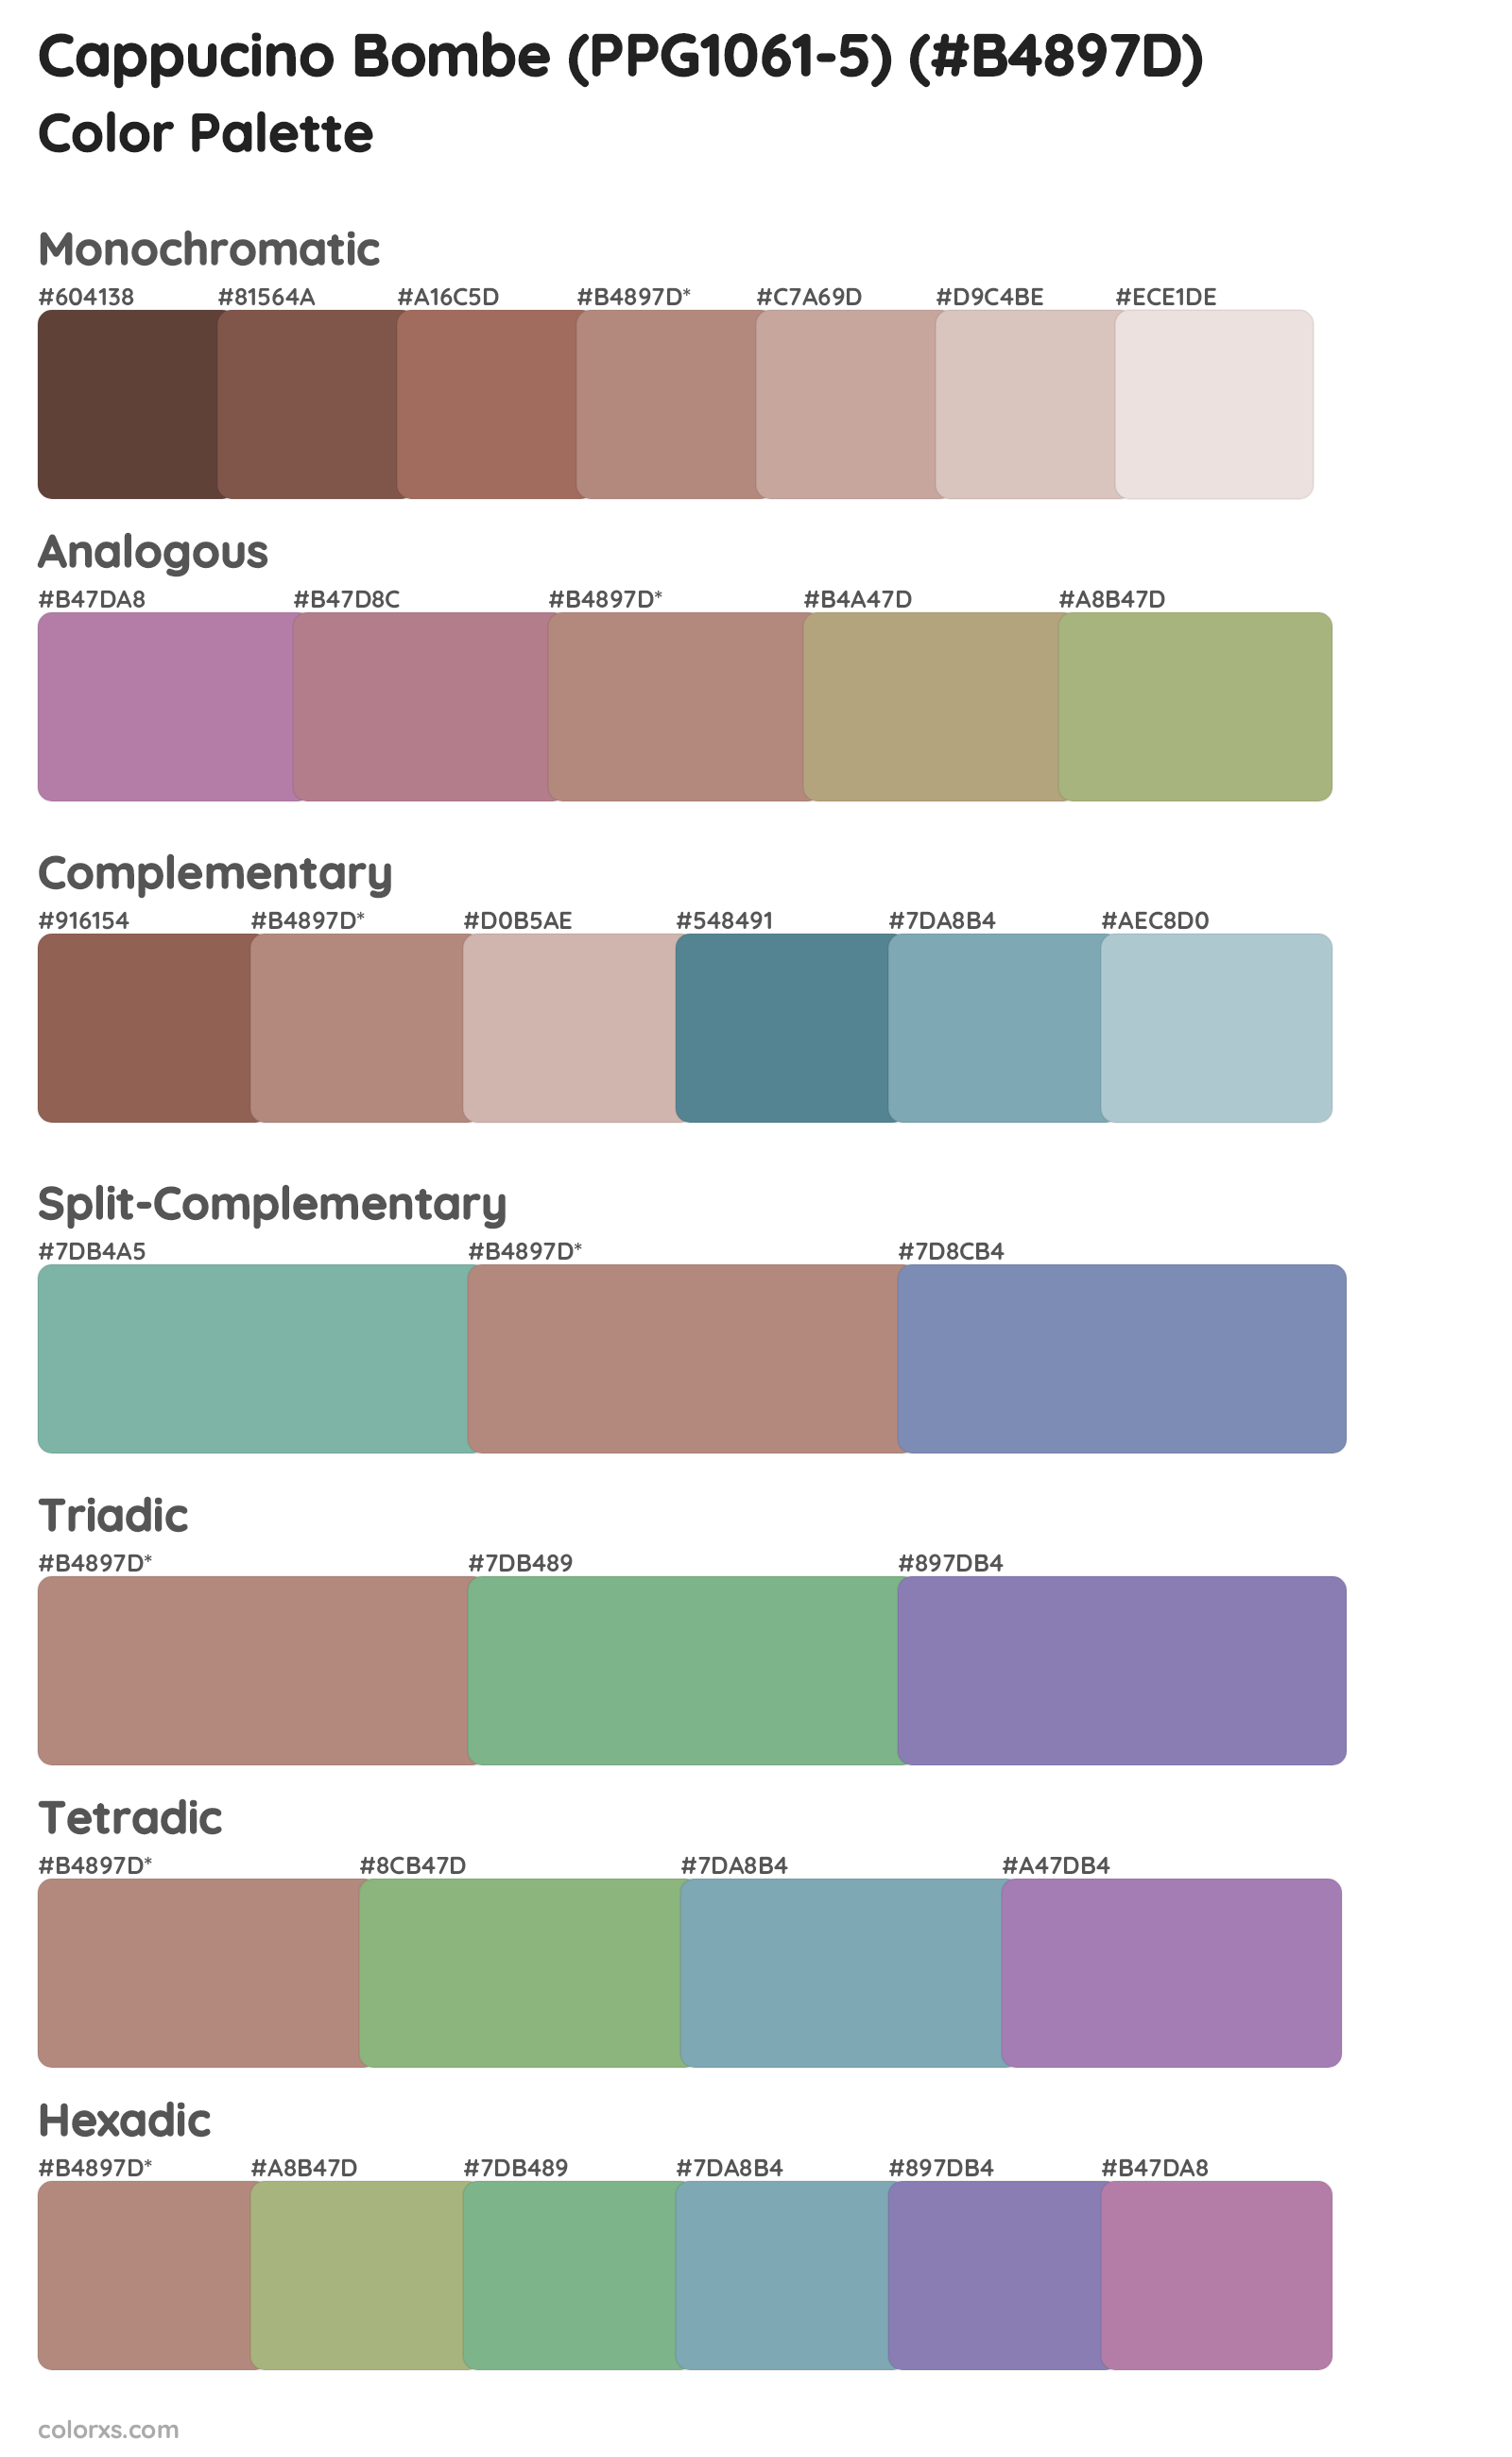 Cappucino Bombe (PPG1061-5) Color Scheme Palettes